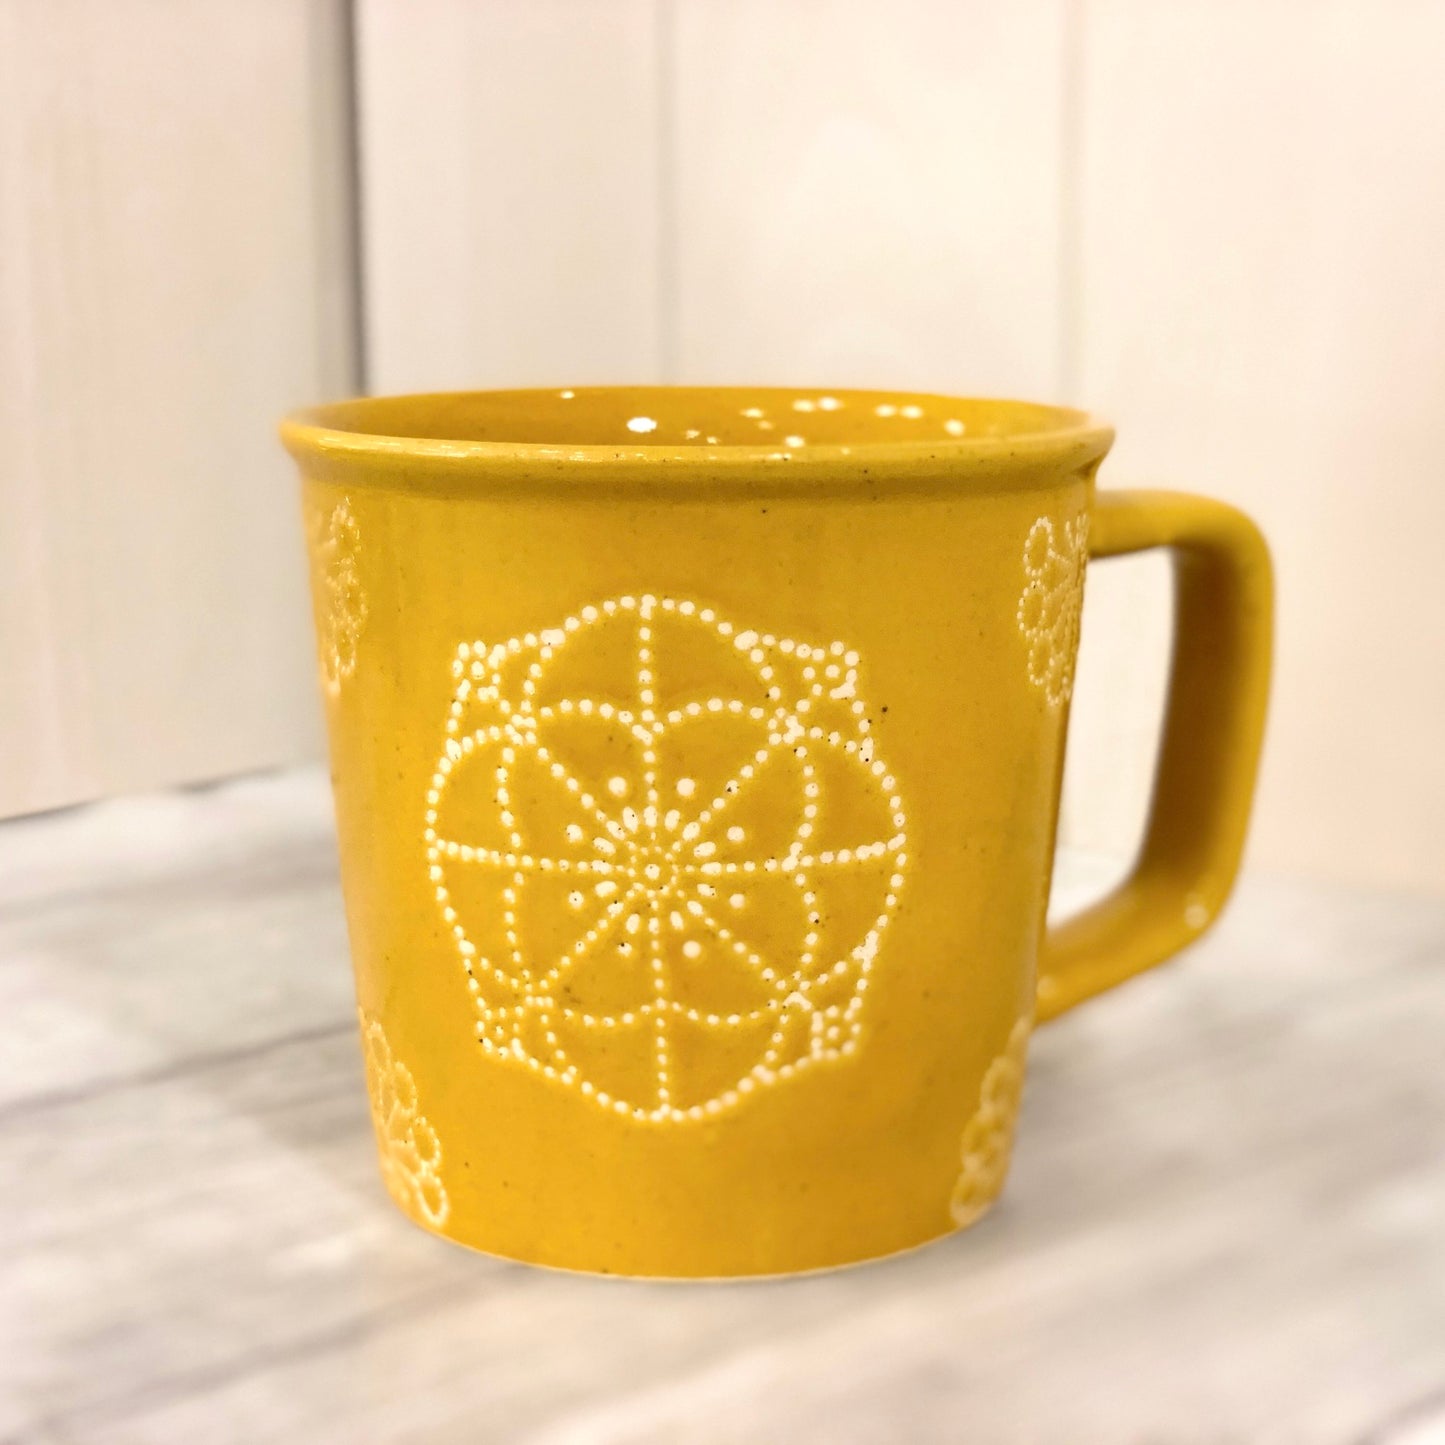 [Hasami ware] [Aizome kiln] [Stitching] [Mug cup] Cute Scandinavian craft